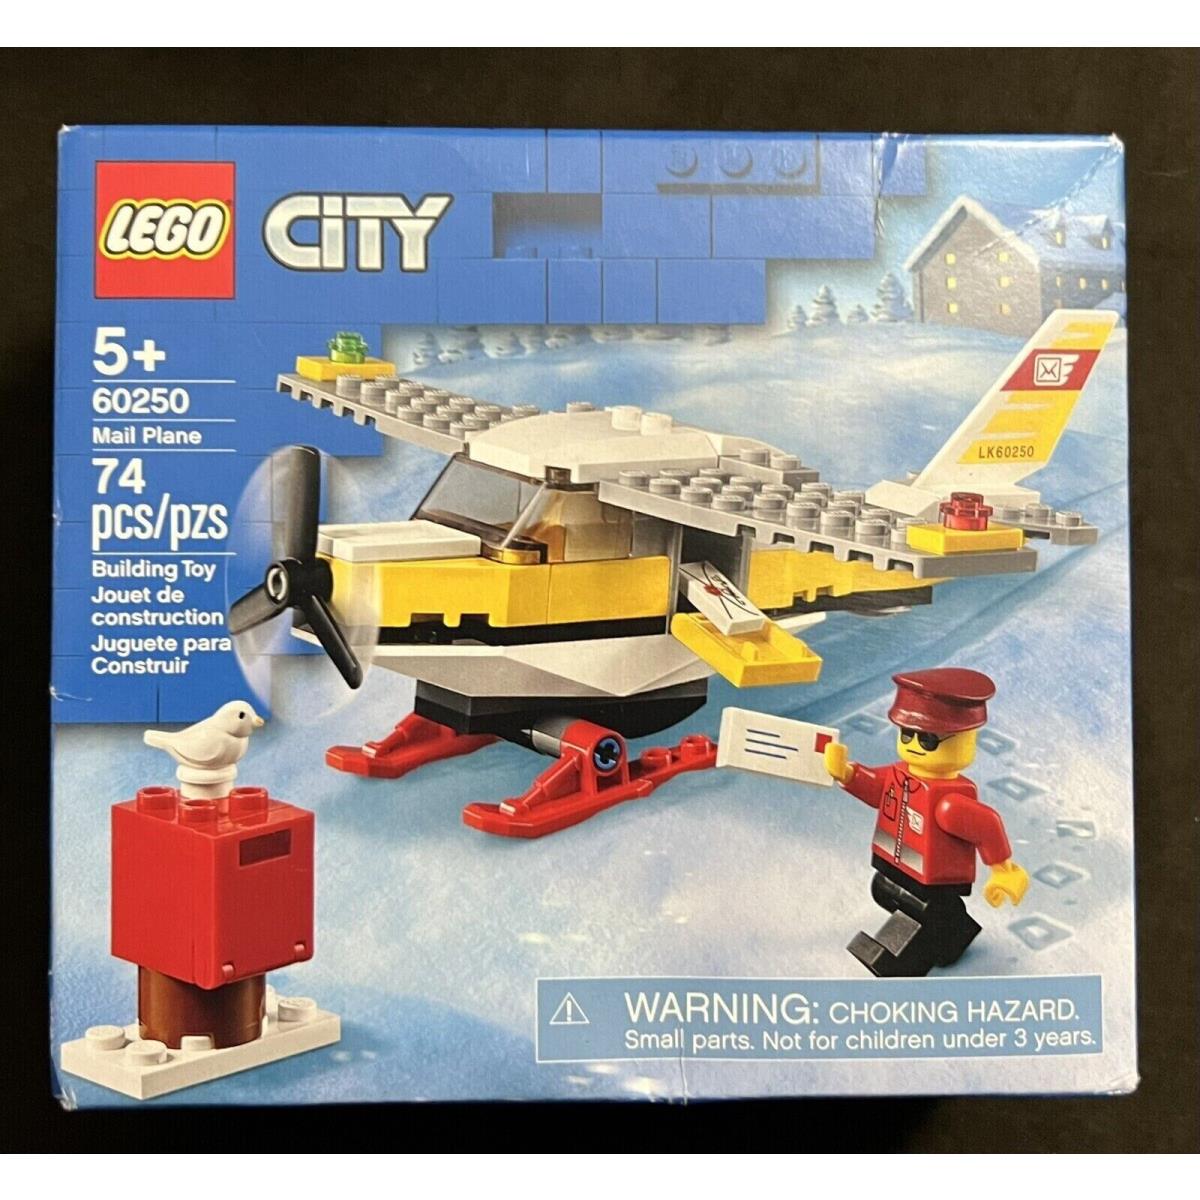 Lego City: Mail Plane 60250